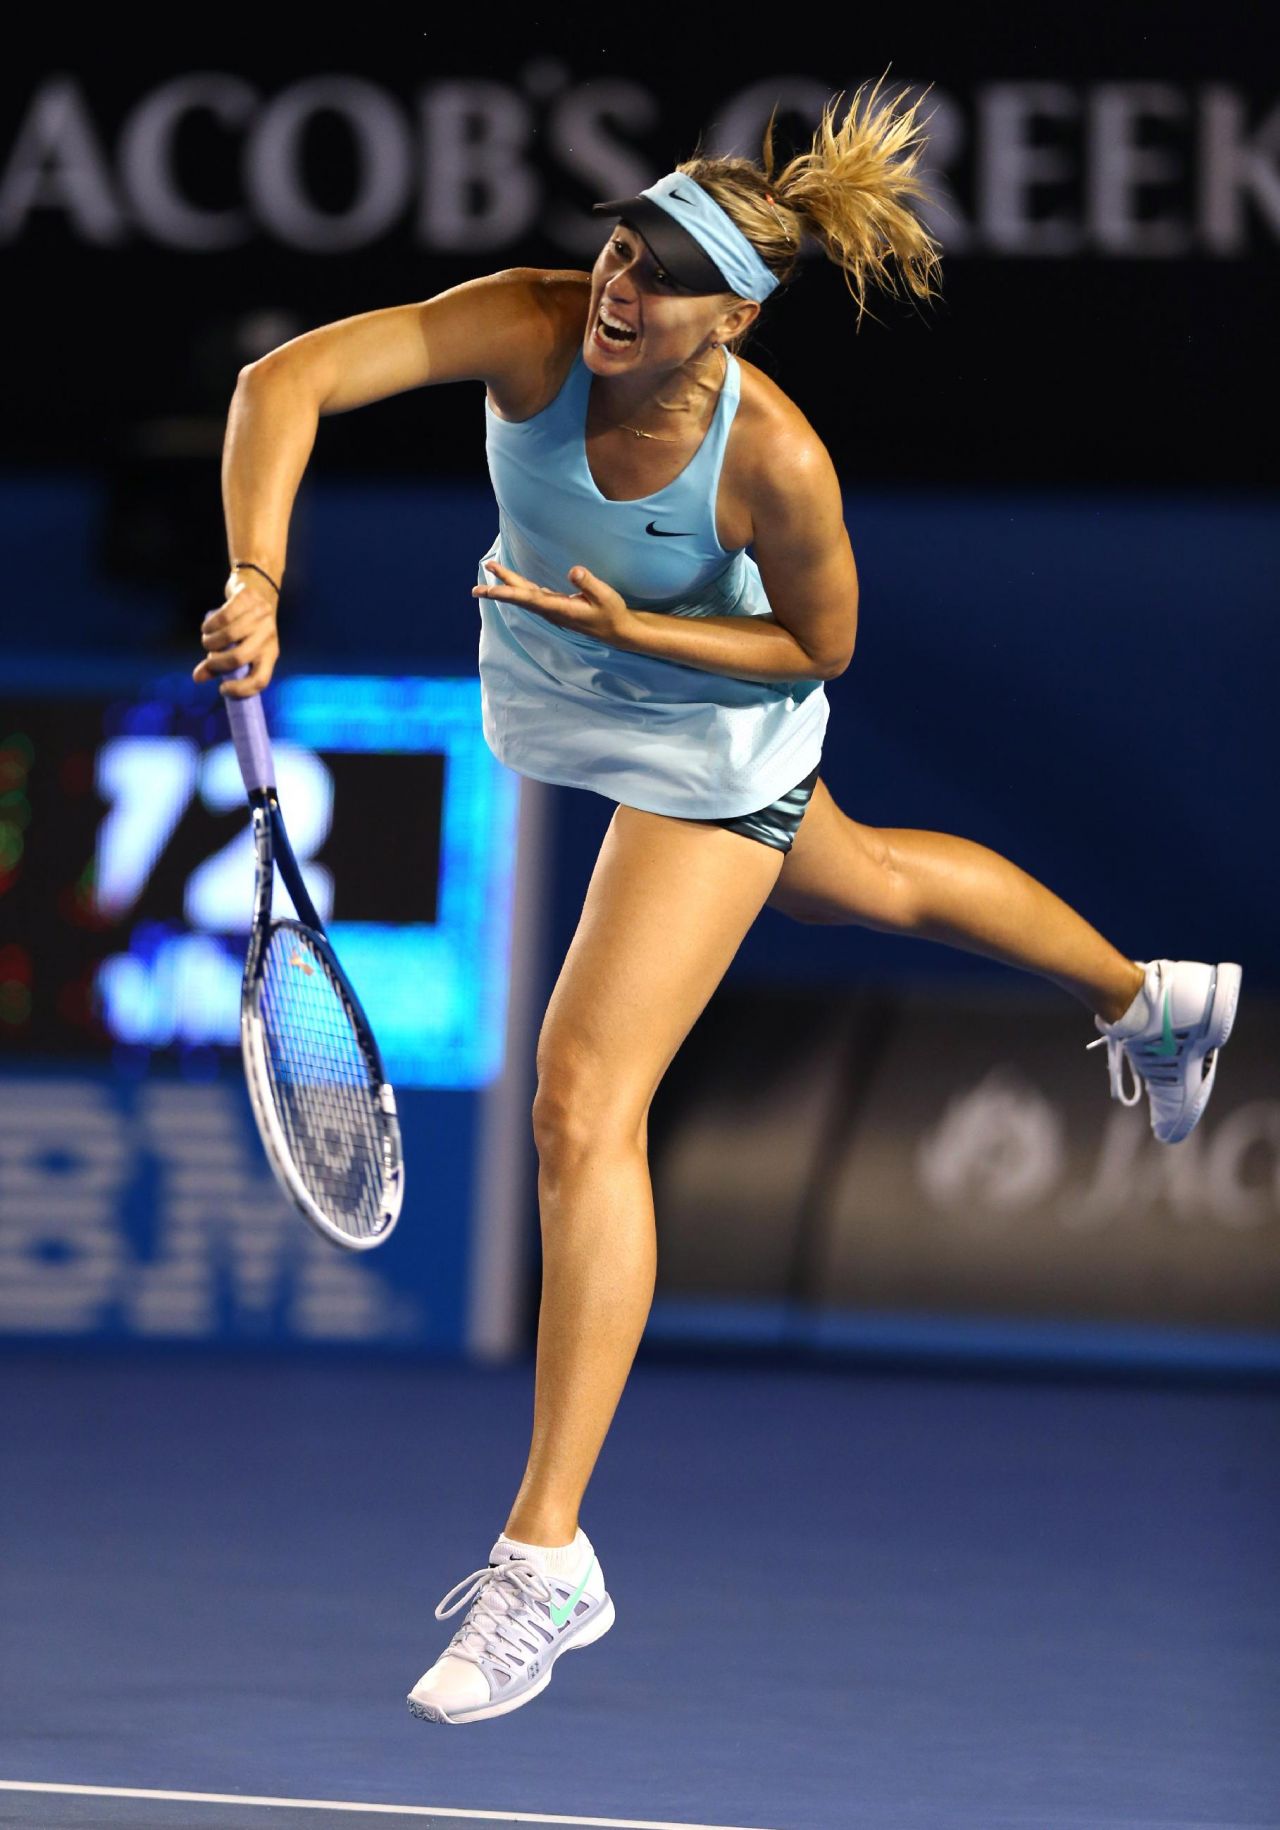 Maria Sharapova - Australian Open - 1st Round, January 14 20141280 x 1830